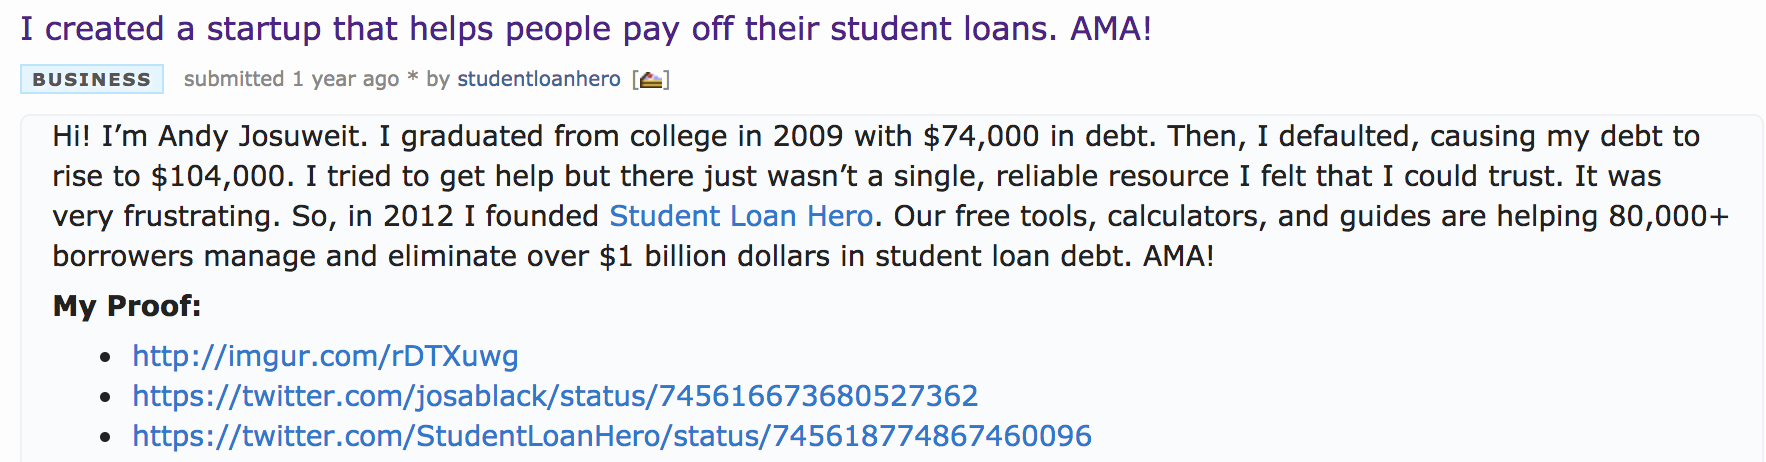 student loan hero reddit AMA one way to get web traffic